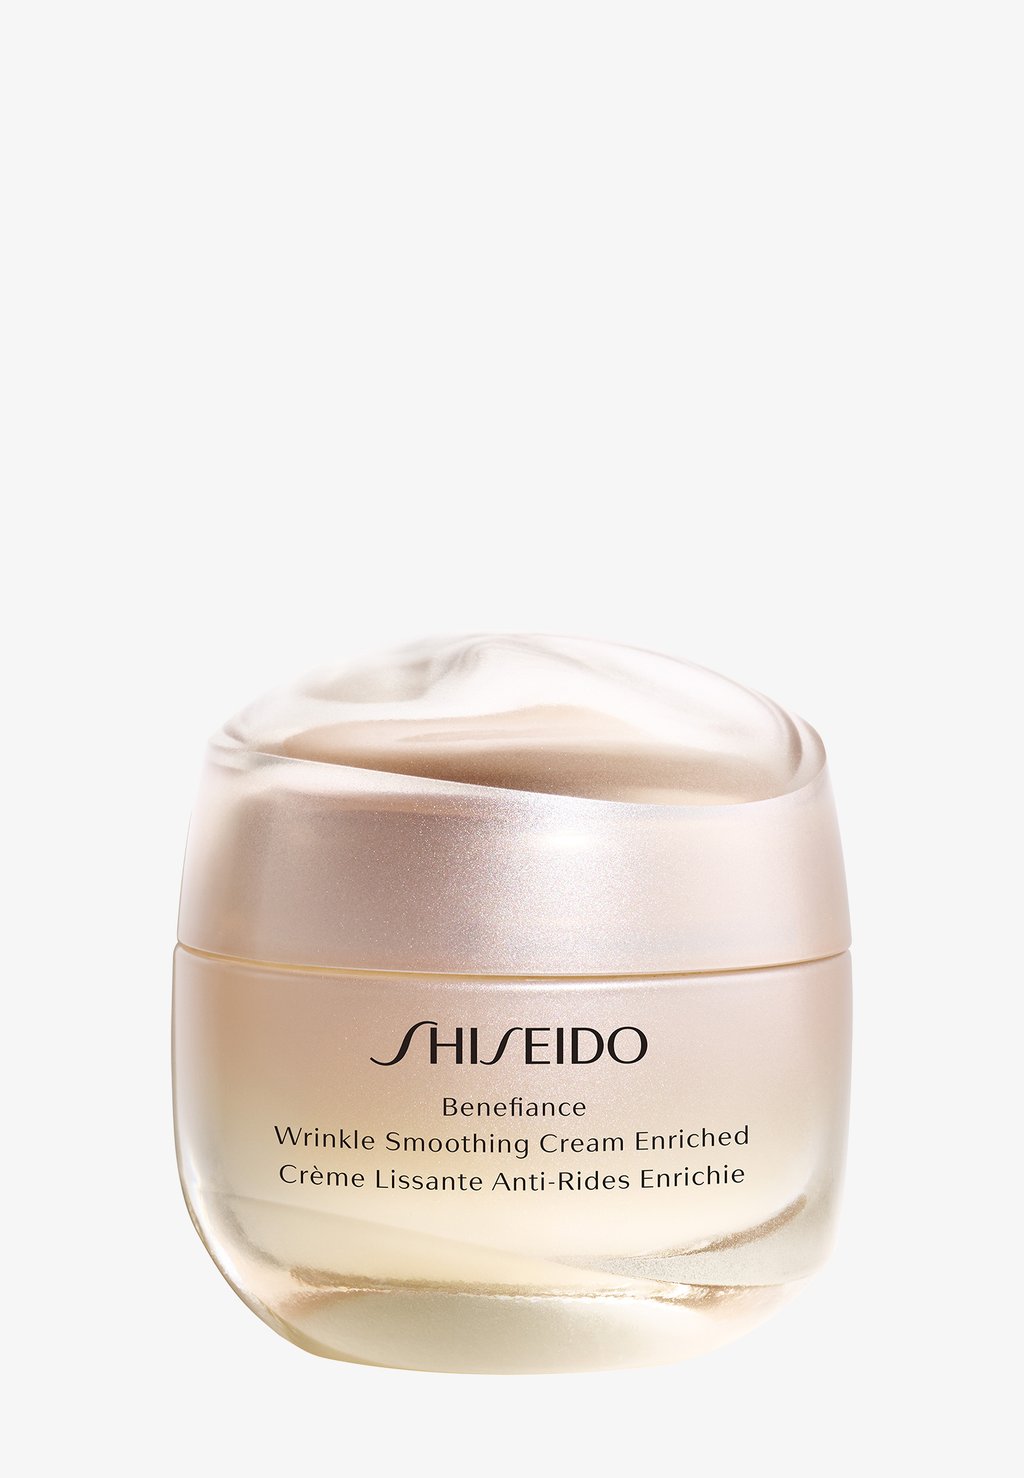 Дневной крем Benefiance Wrinkle Smoothing Cream Enriched Shiseido